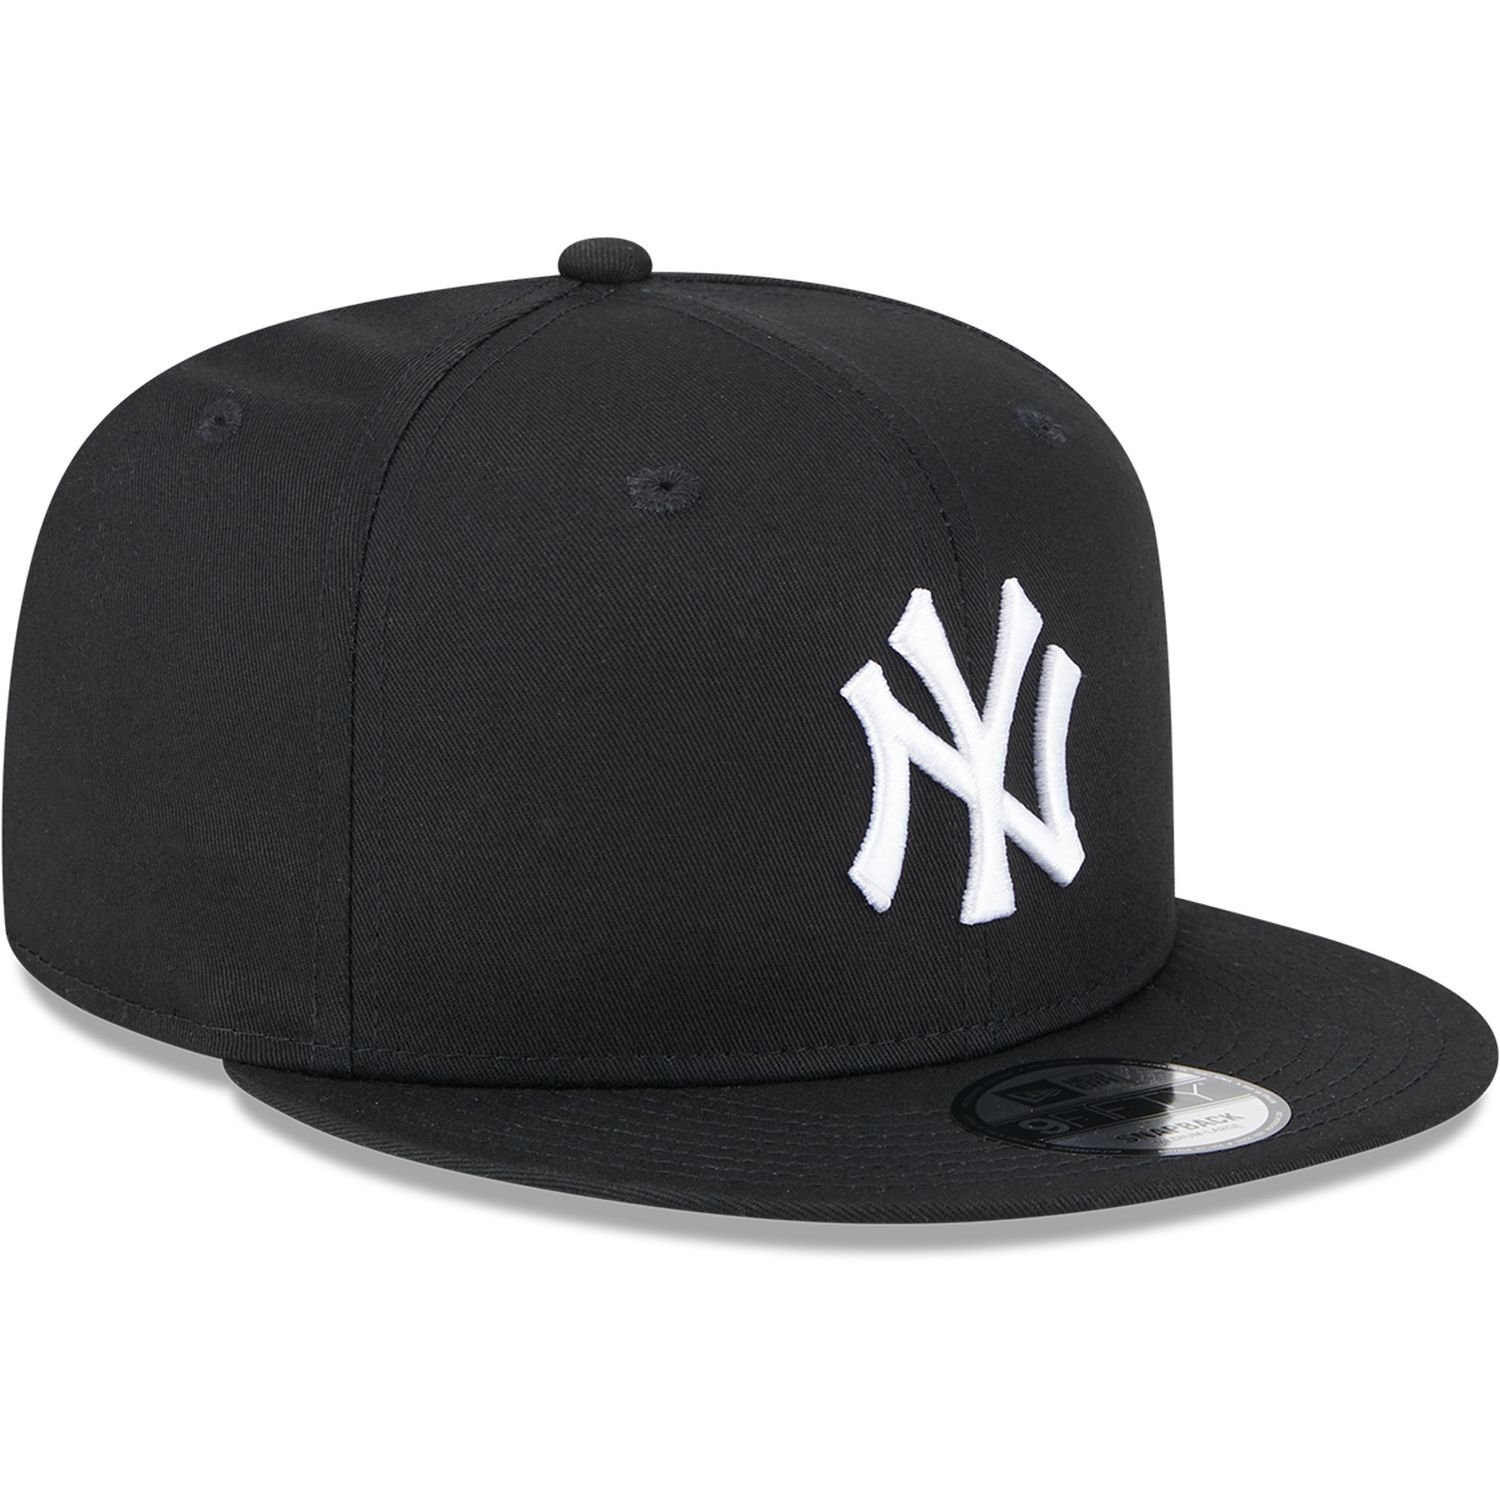 York New Cap METALLIC Snapback Era 9Fifty New Yankees